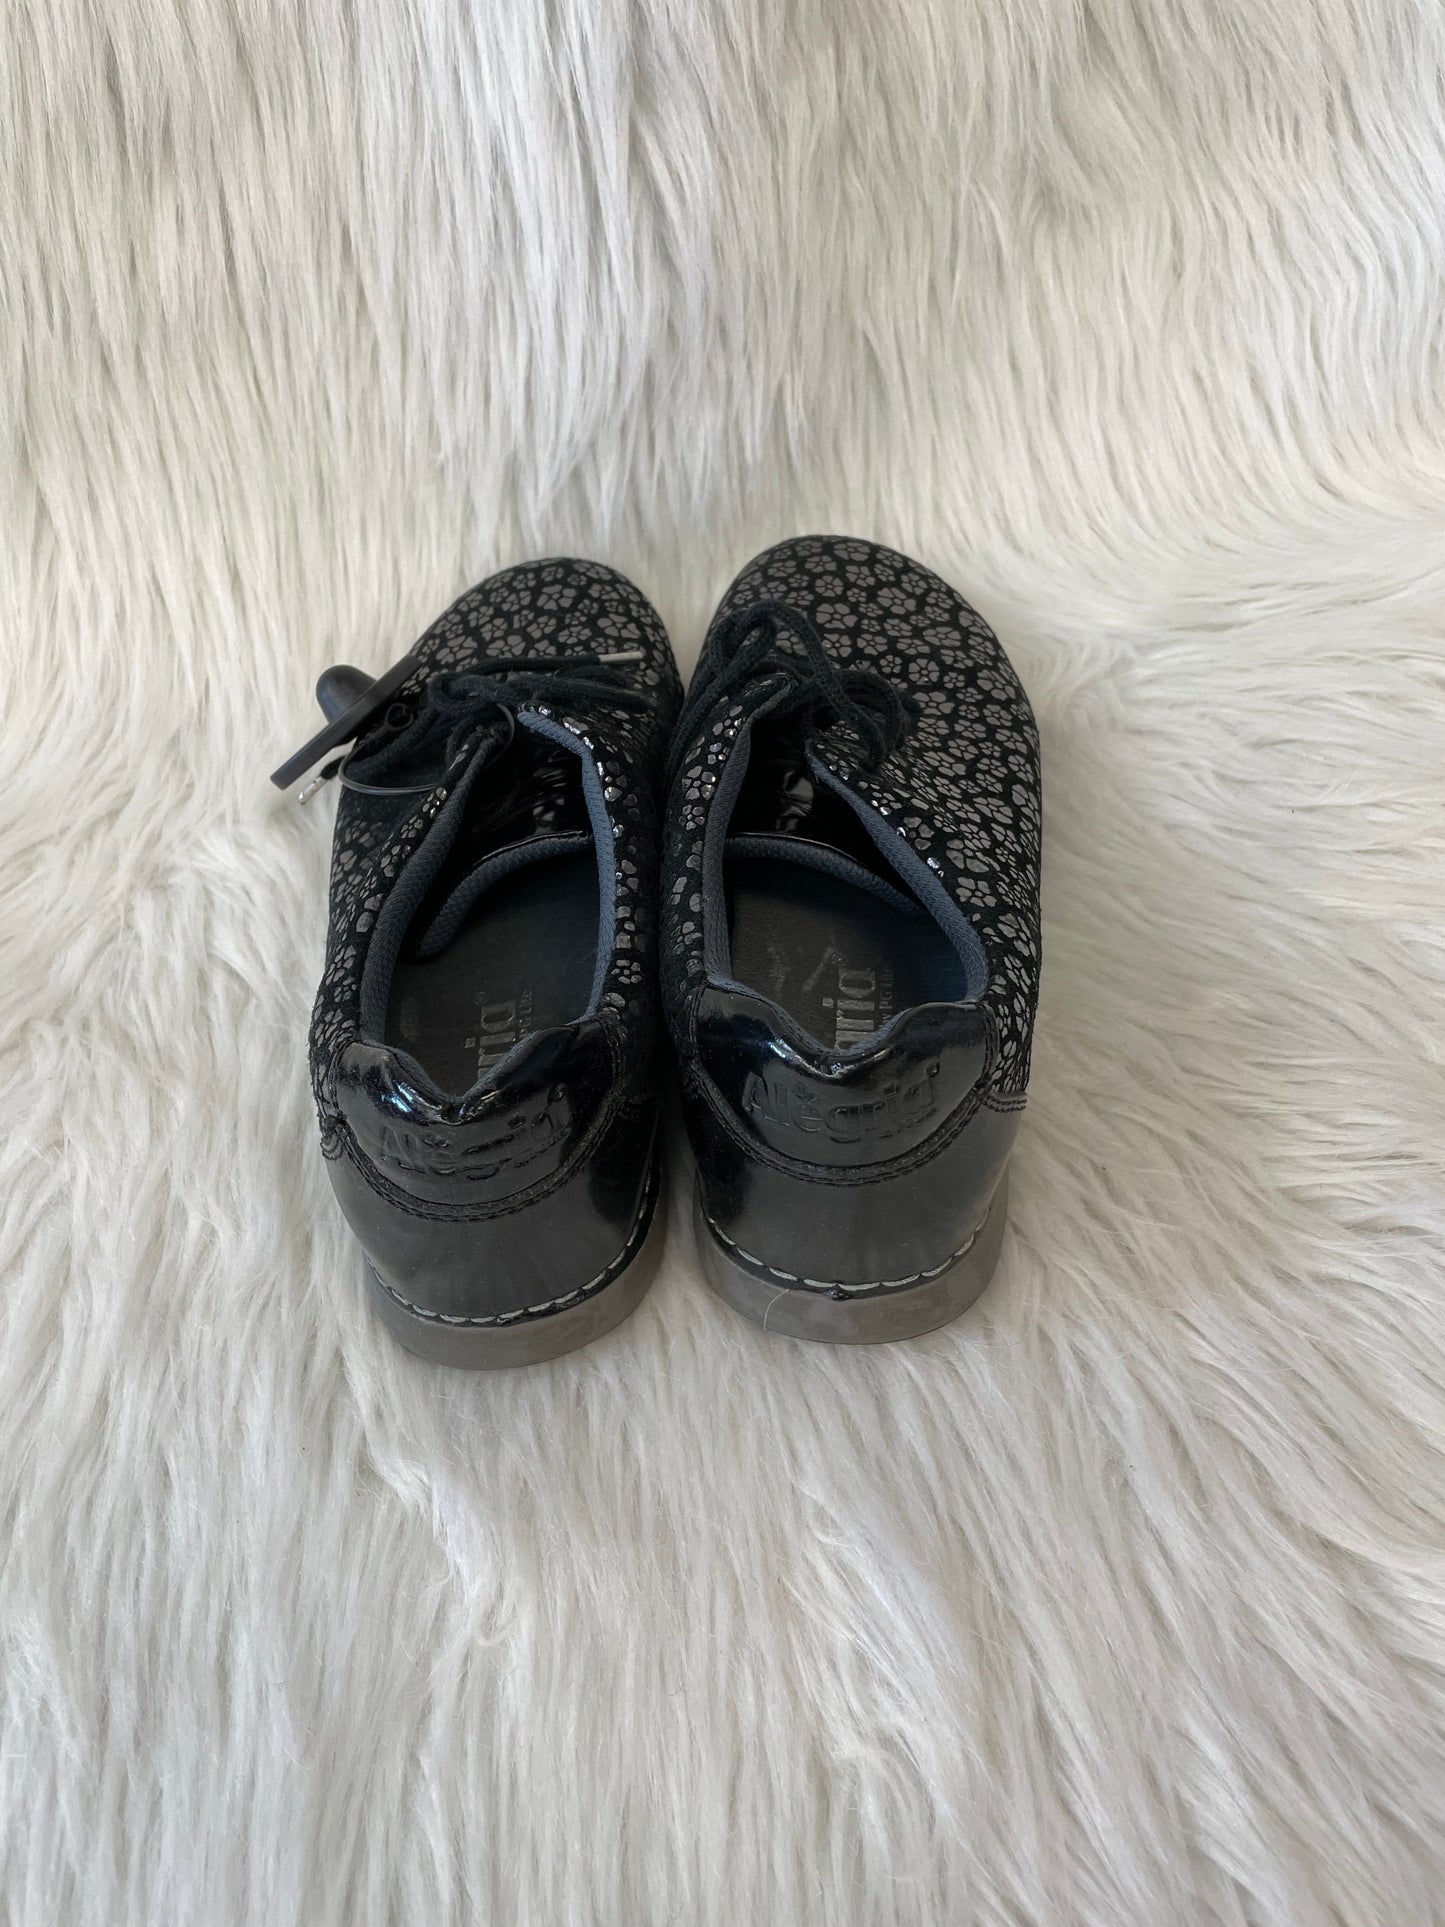 Black & Silver Shoes Flats Alegria, Size 6.5